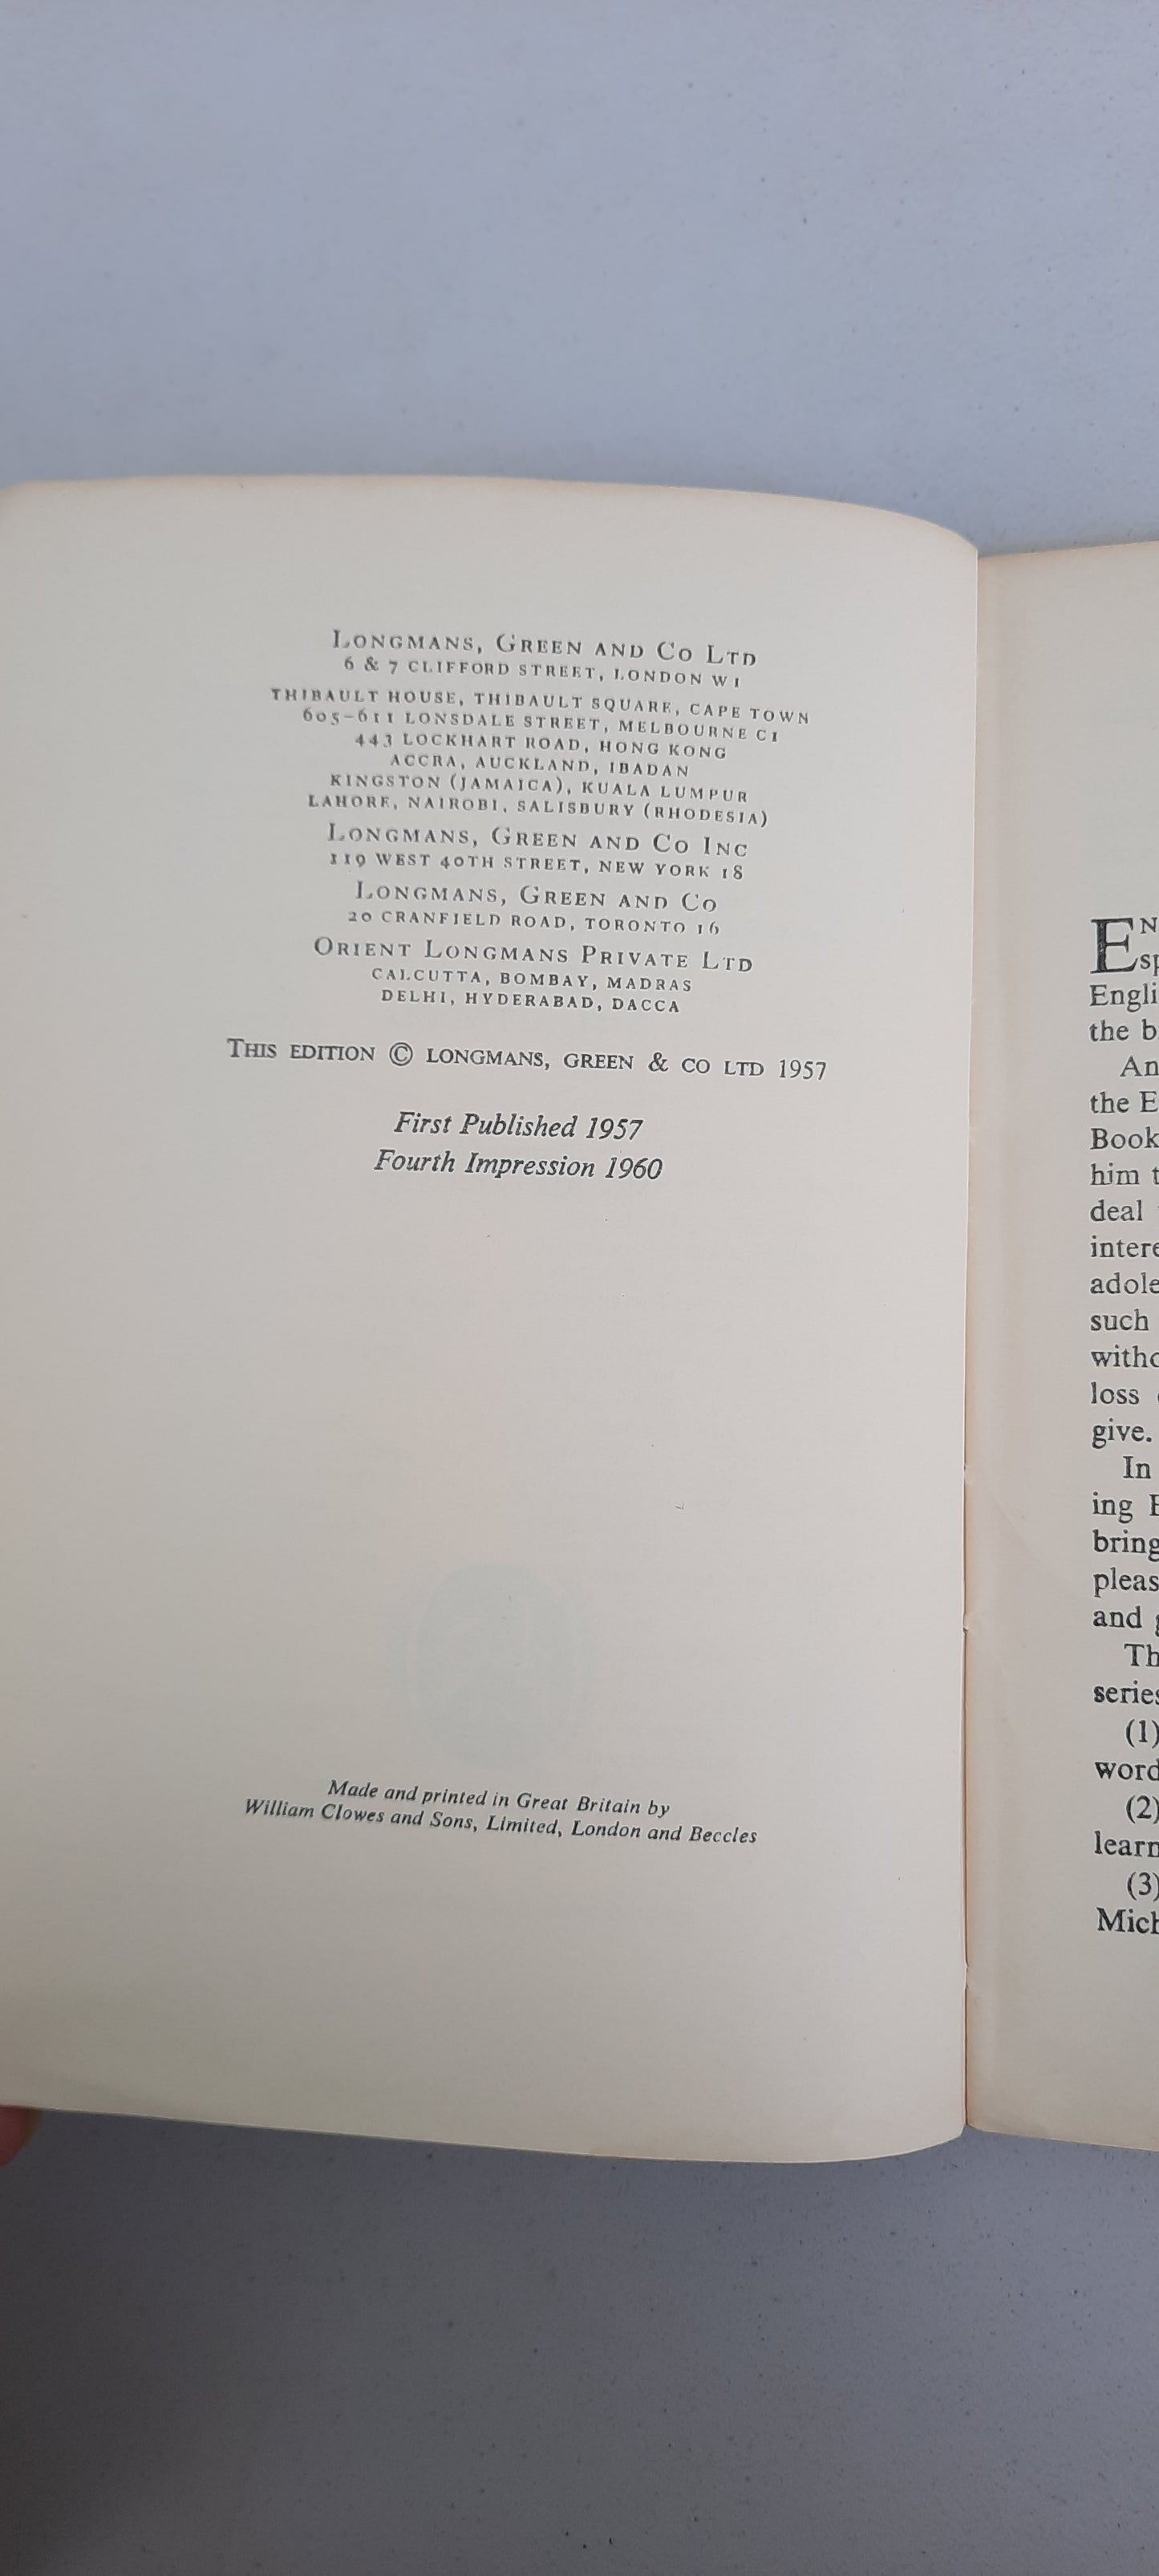 Longmans' Simplified English Series "Vanity Fair" 1960 by W. M. Thackeray